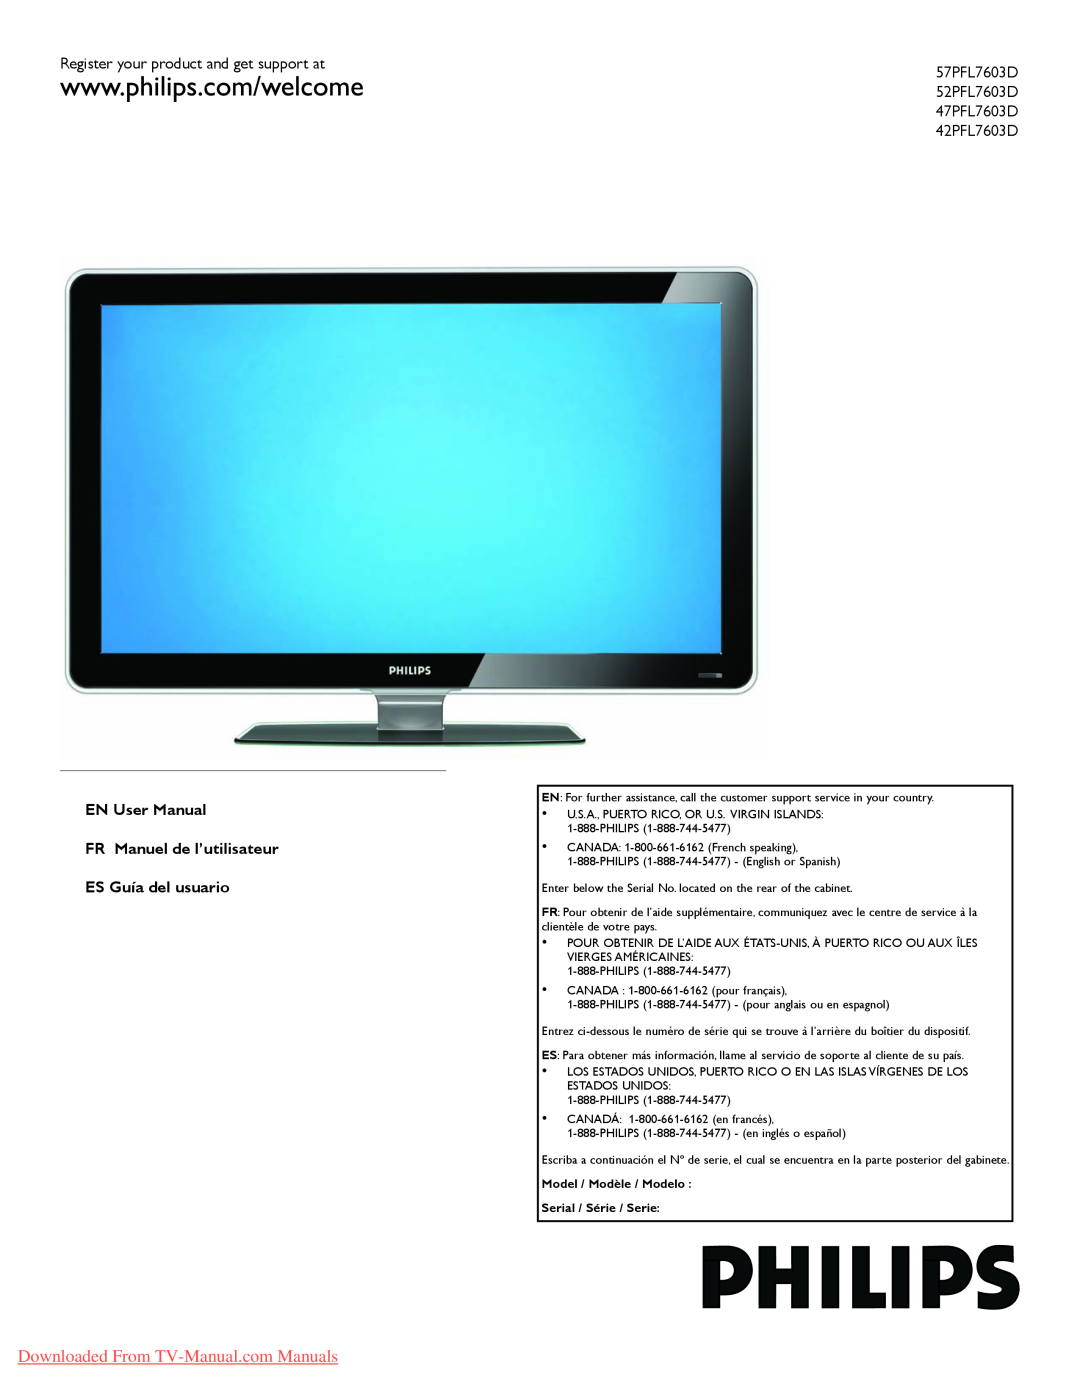 Philips 47PFL7603D manual Philips Serie Televisor LCD con Ambilight, Ilumina tus sentidos 